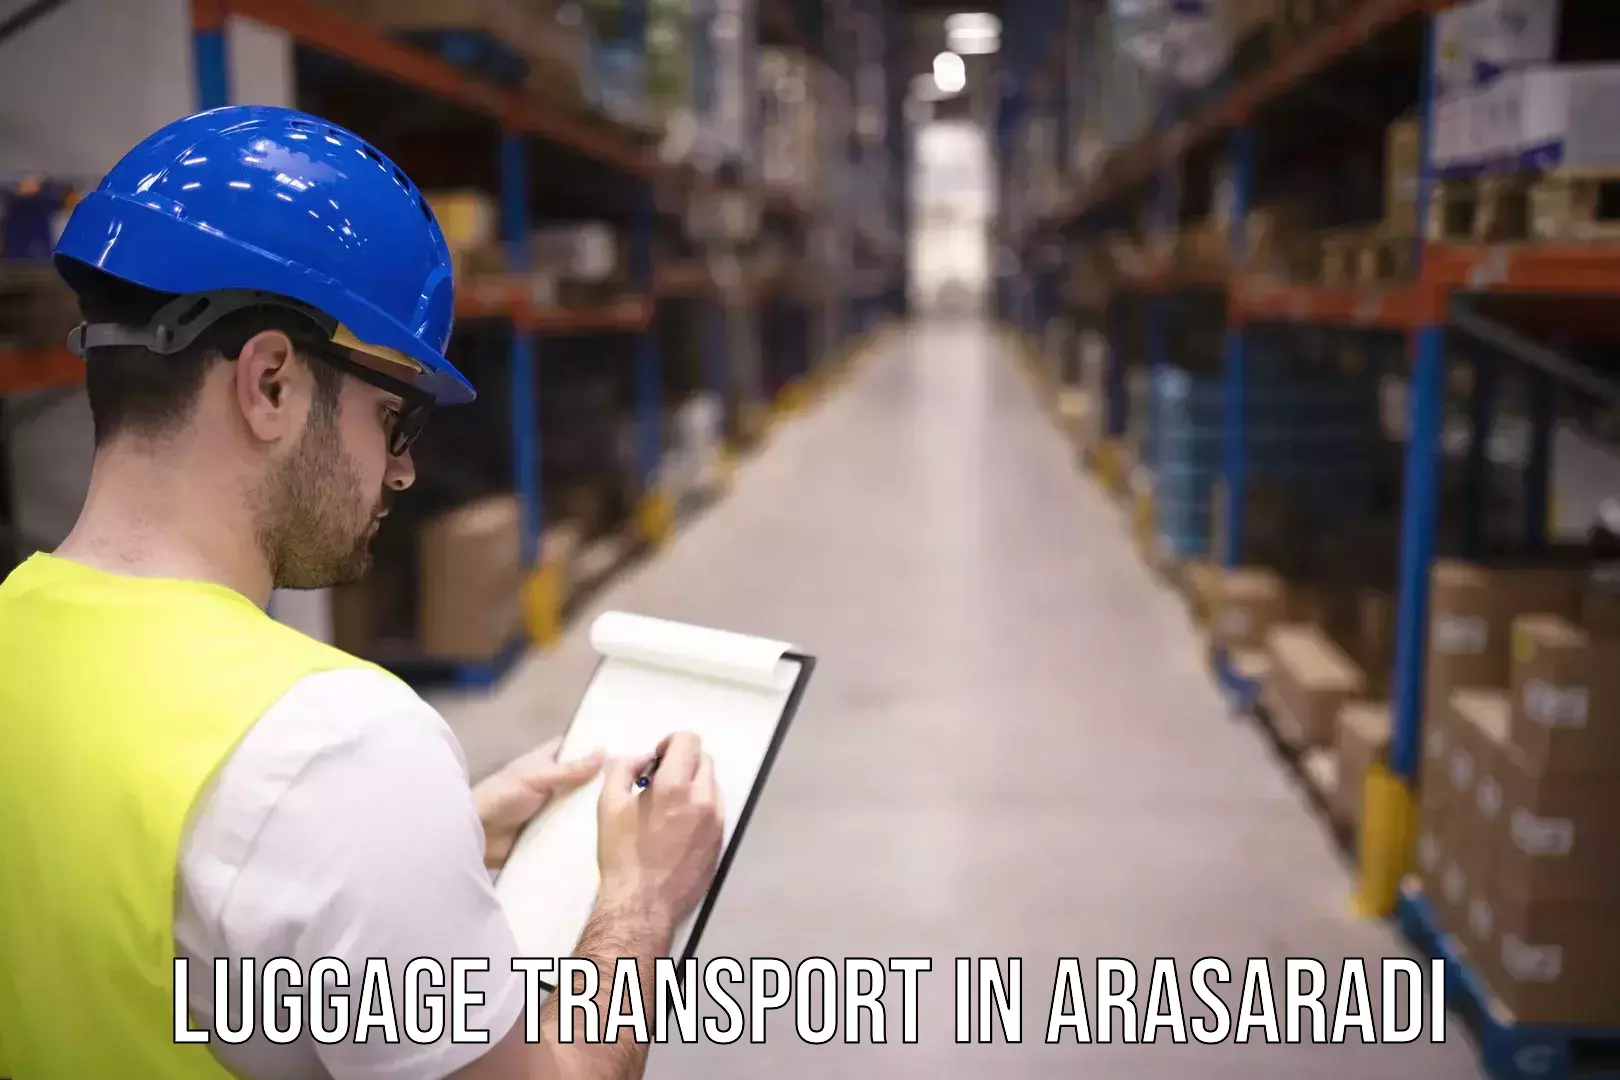 Baggage shipping service in Arasaradi